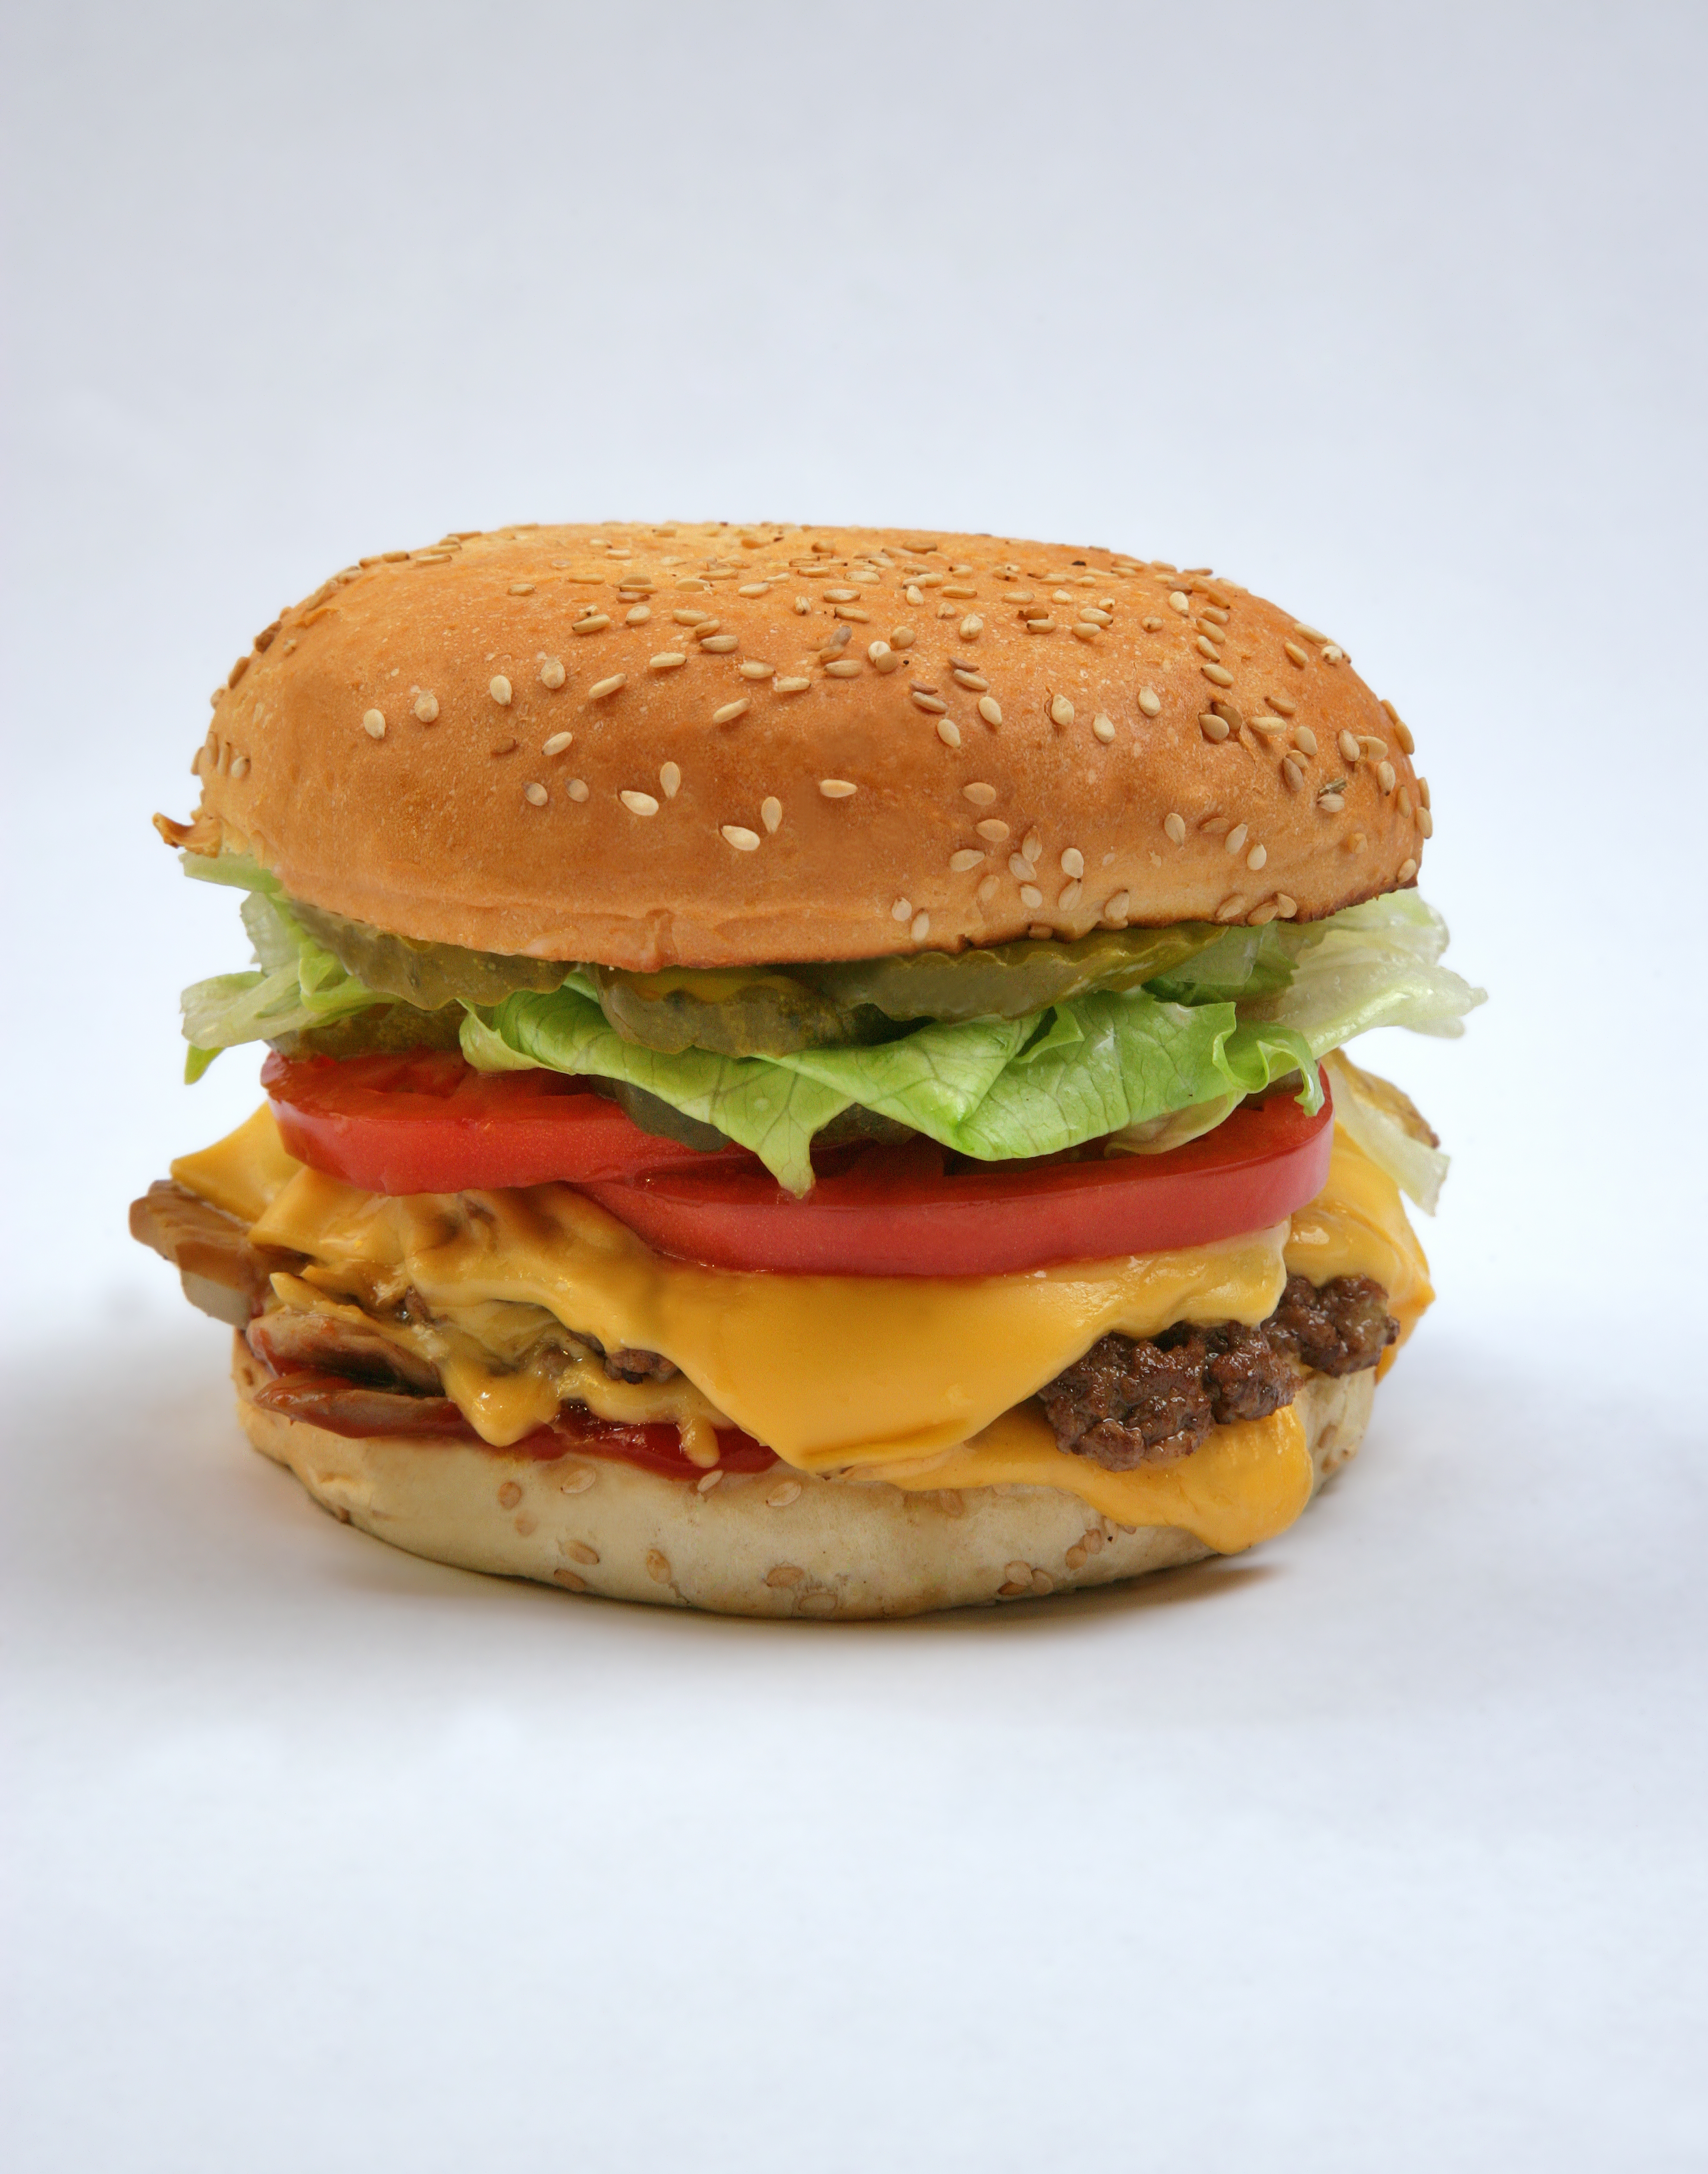 z-burger-cheeseburger-freeburger-9-17-10.jpg